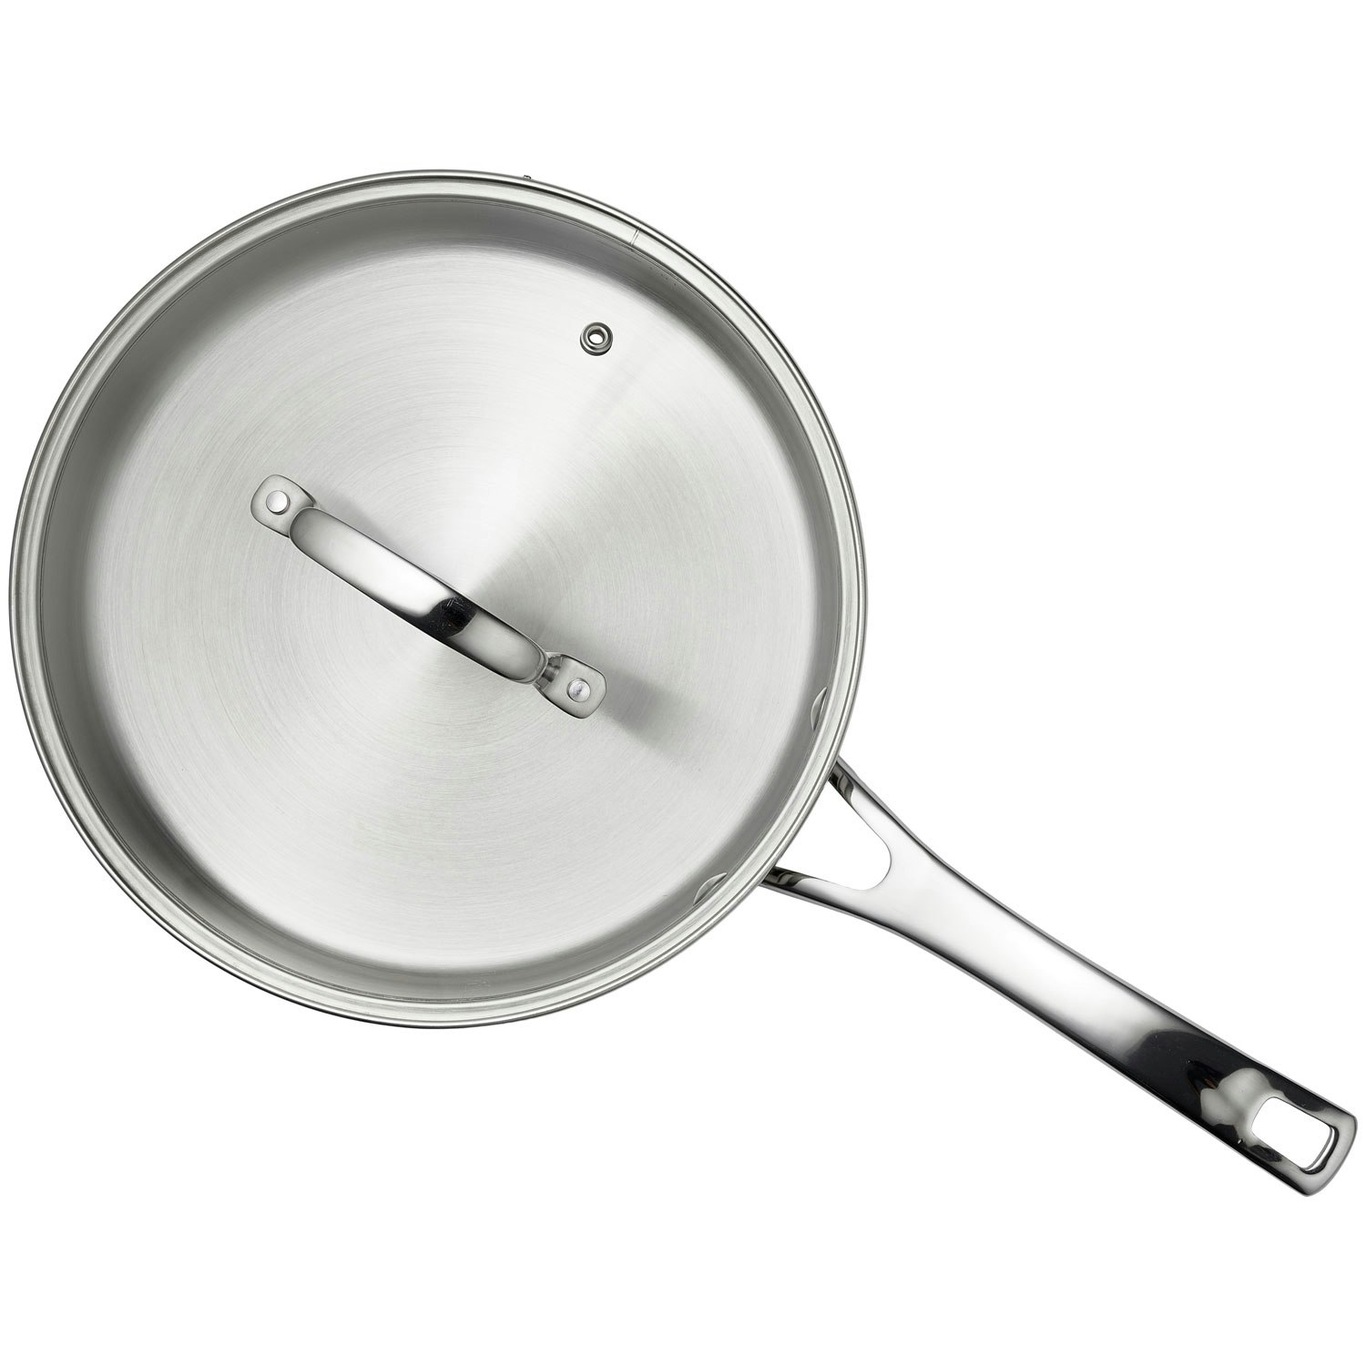 https://royaldesign.com/image/2/kitchenware-by-tareq-taylor-rocket-saute-pan-24-cm-24-l-0?w=800&quality=80